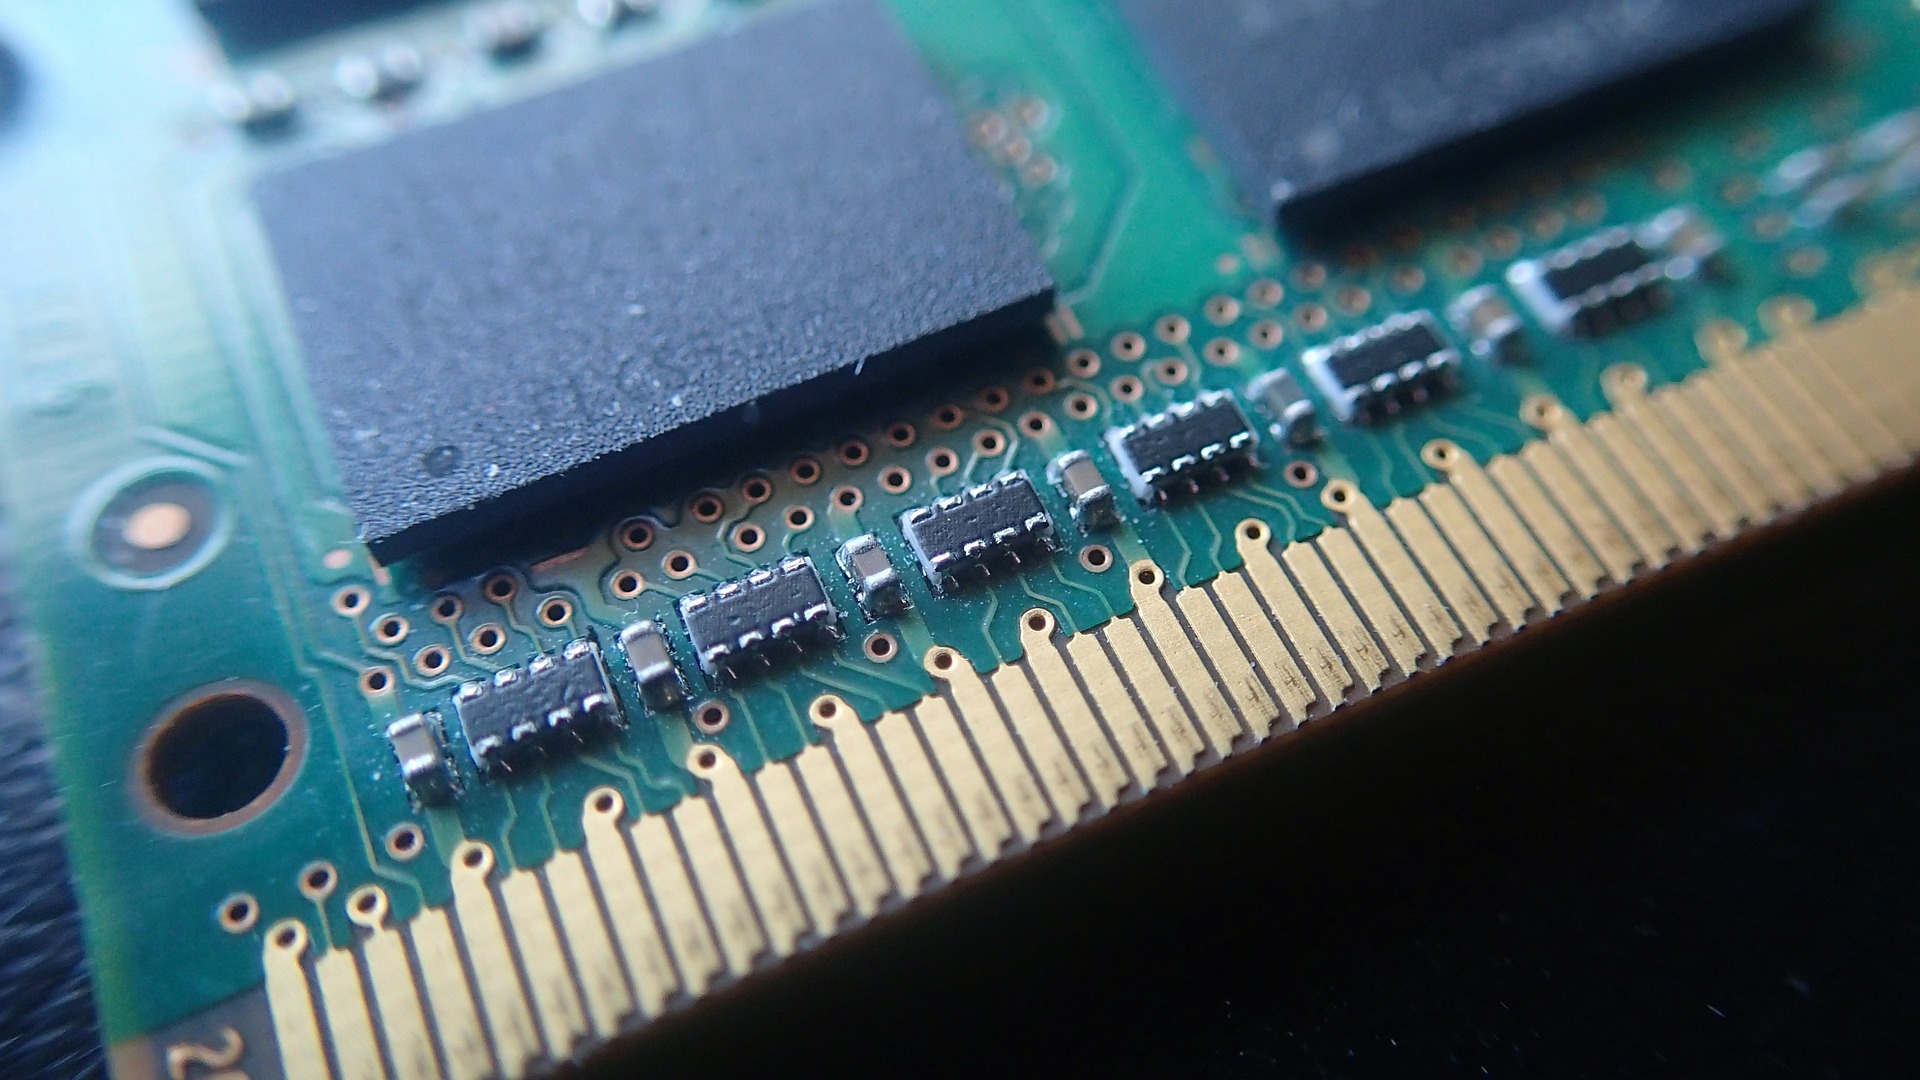 Close up of a green RAM